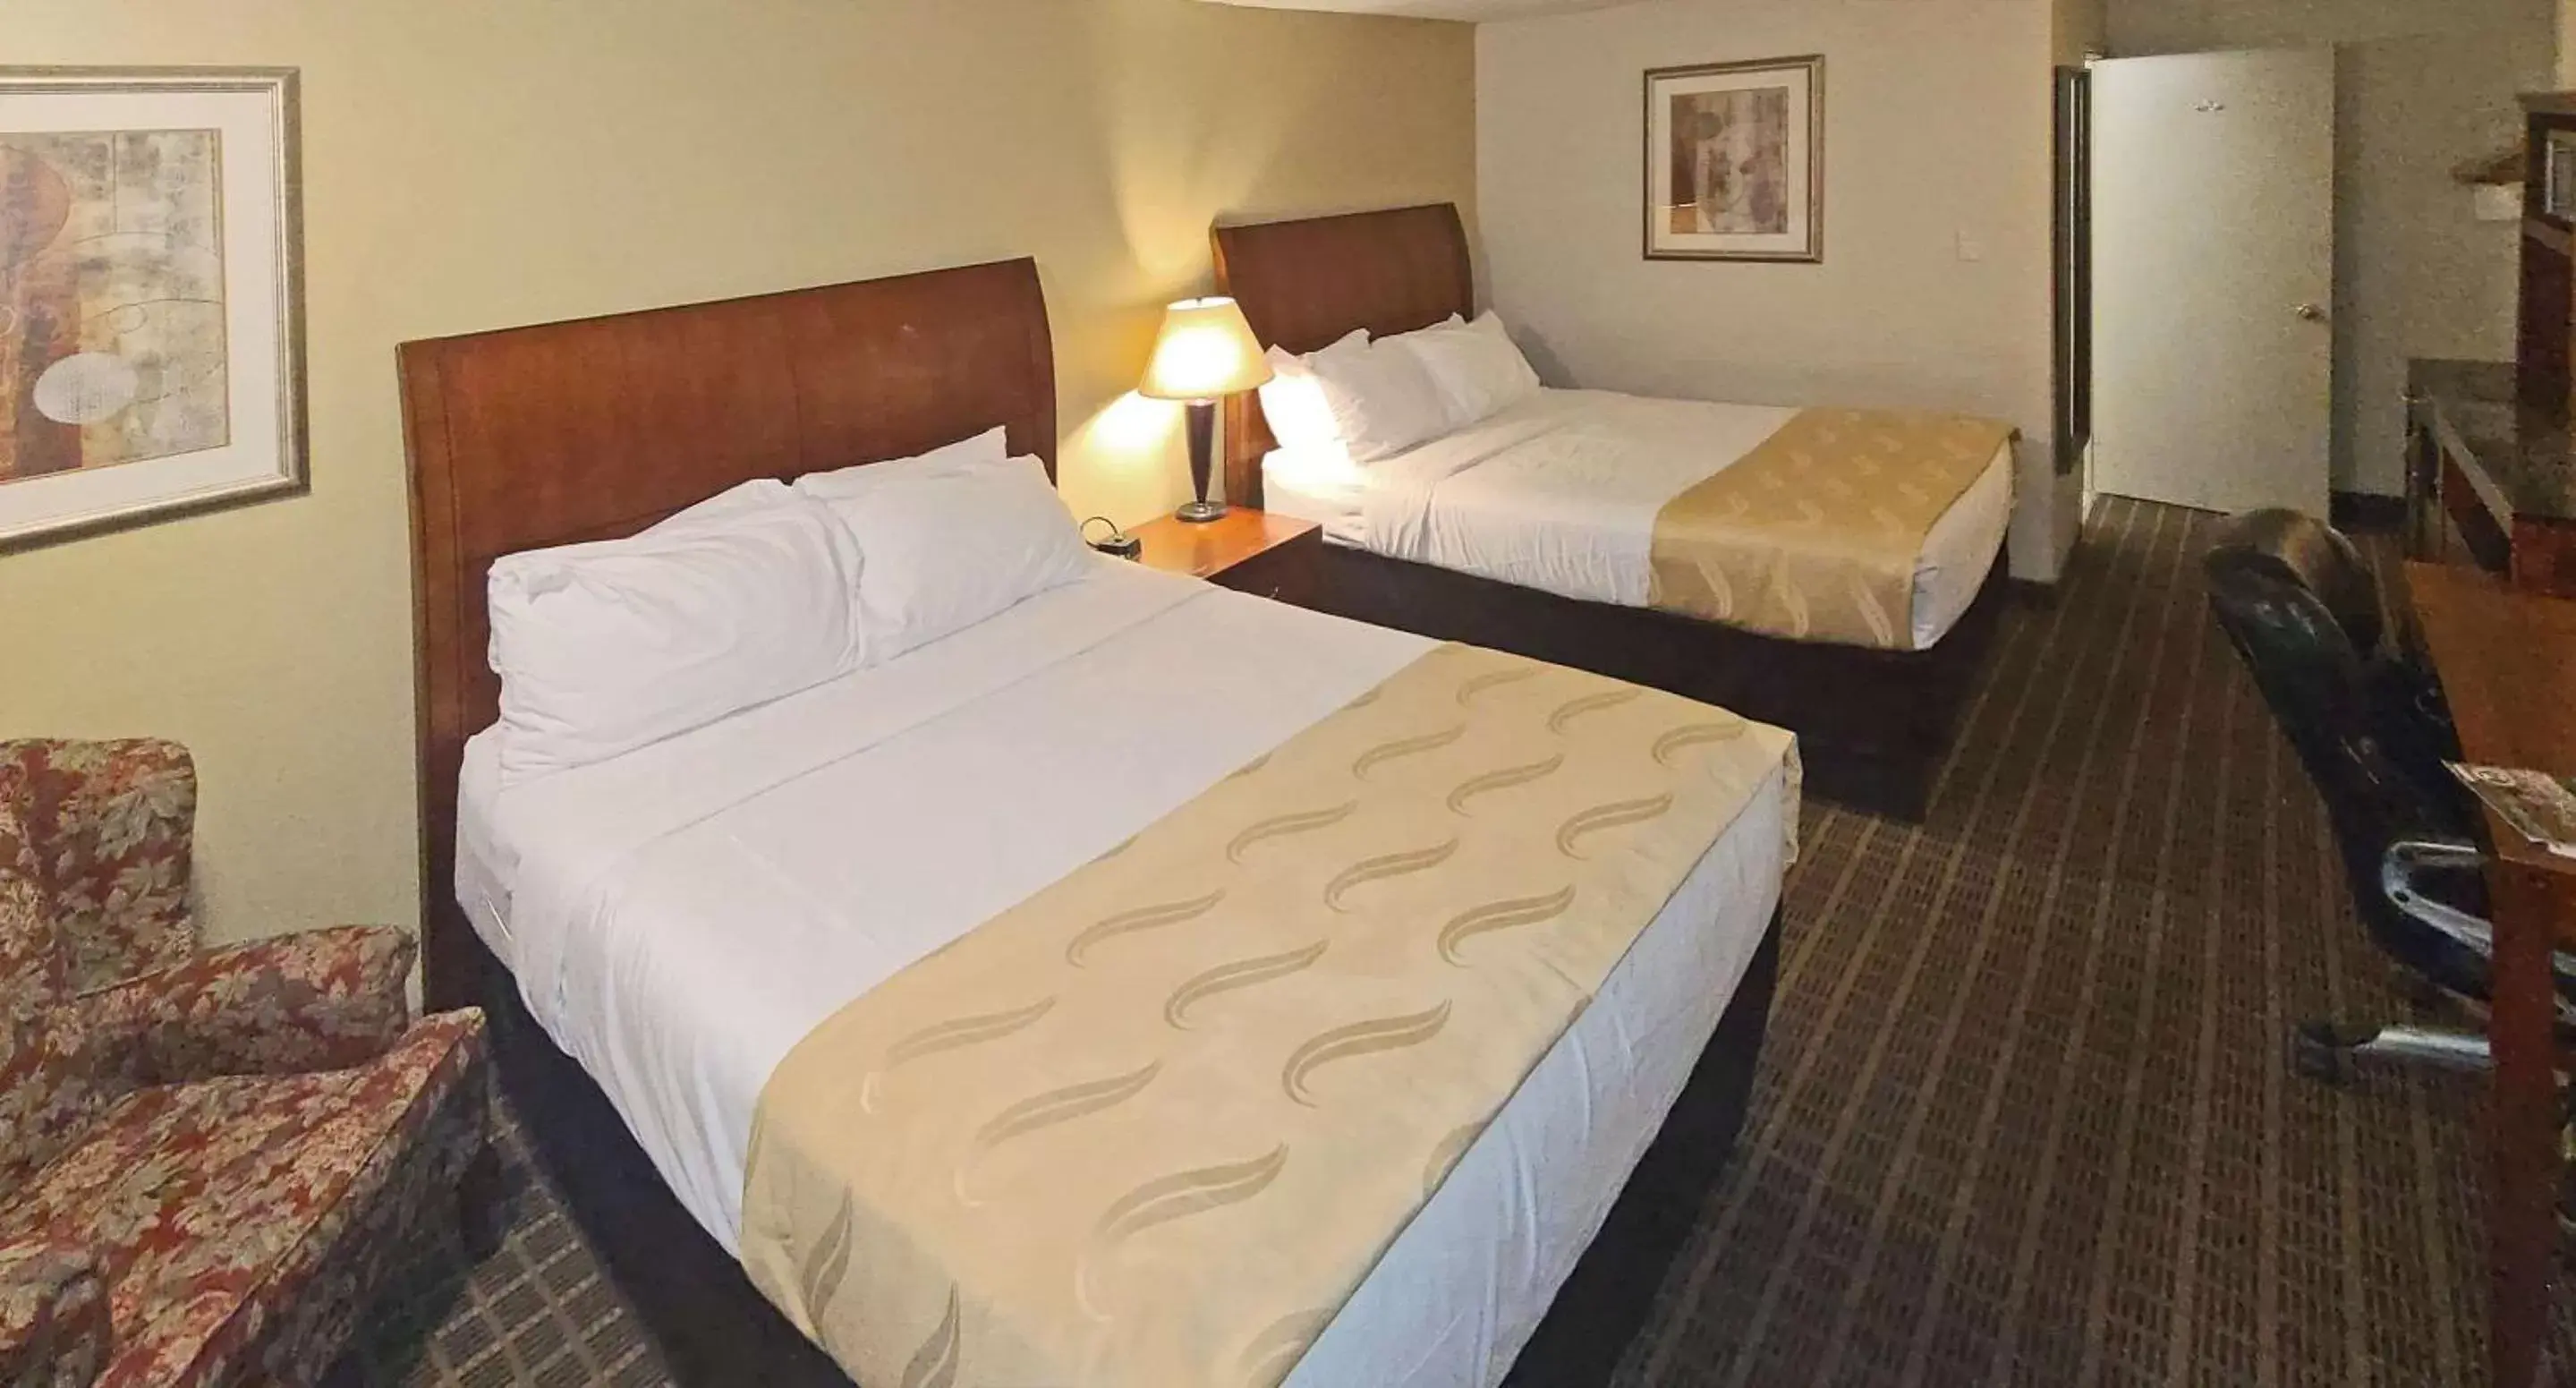 Bedroom, Bed in Quality Inn & Suites 1000 Islands